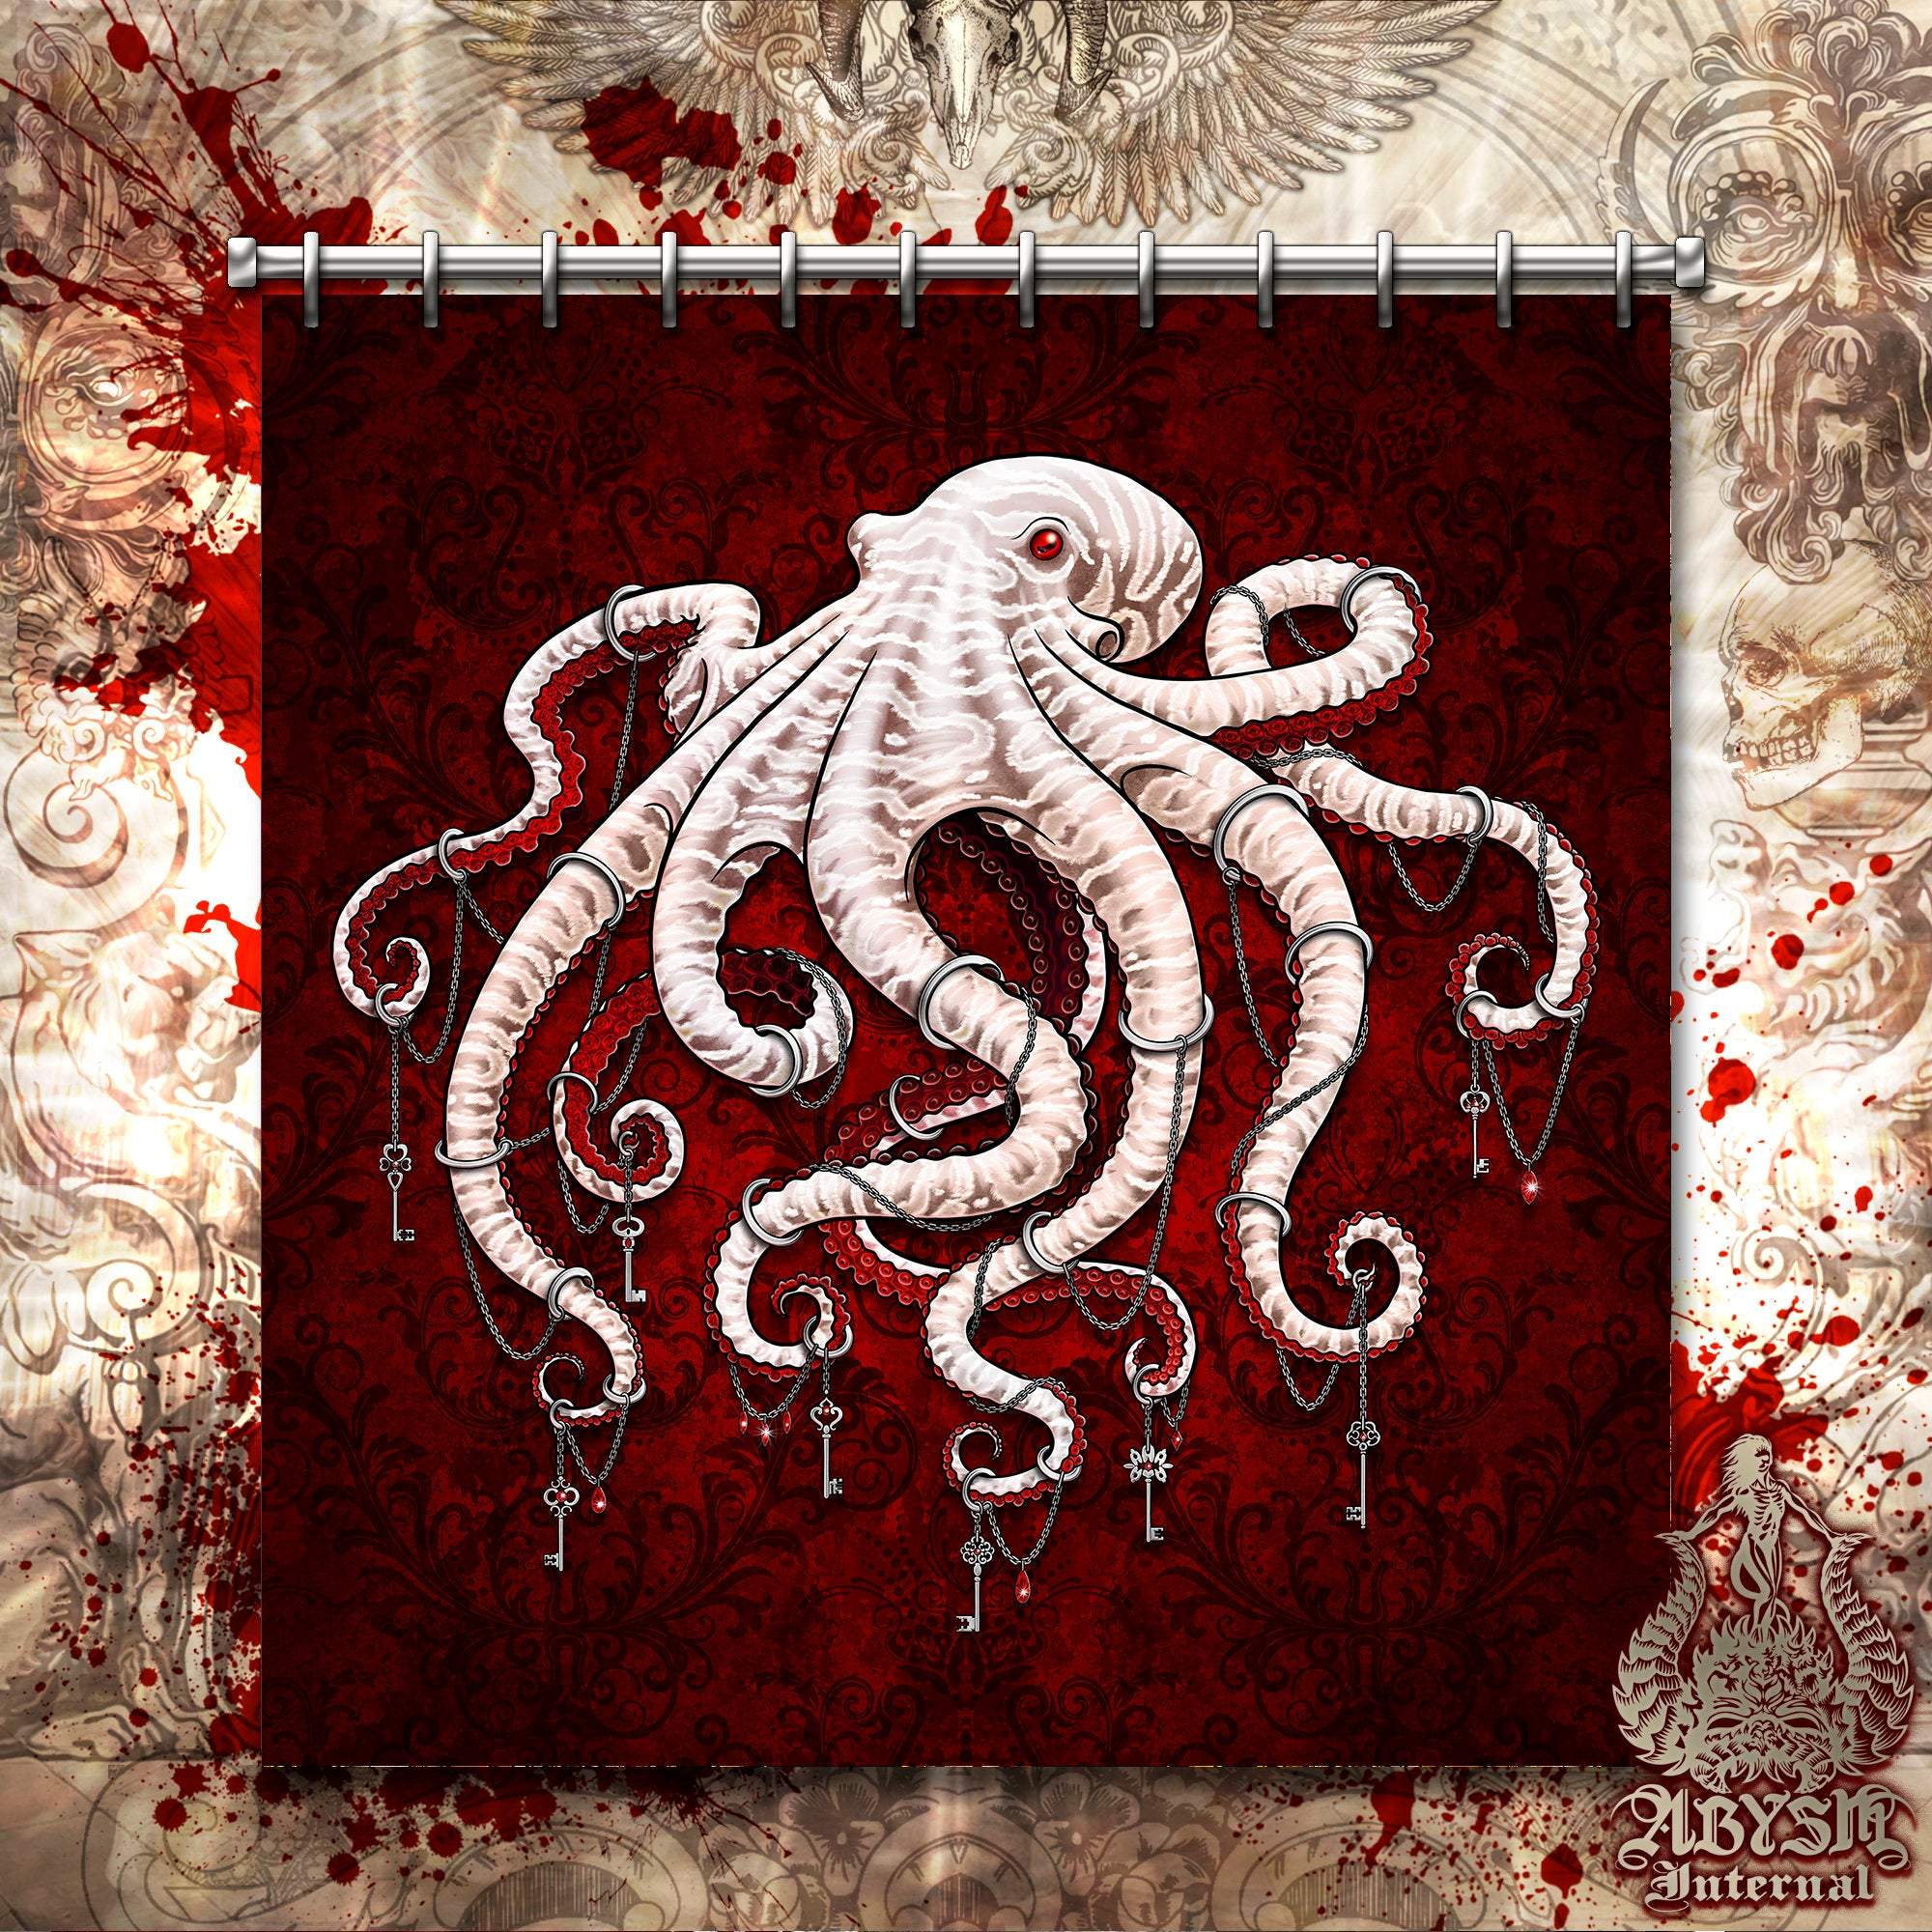 Octopus Shower Curtain, Gothic Bathroom Decor - Bloody Red & White - Abysm Internal